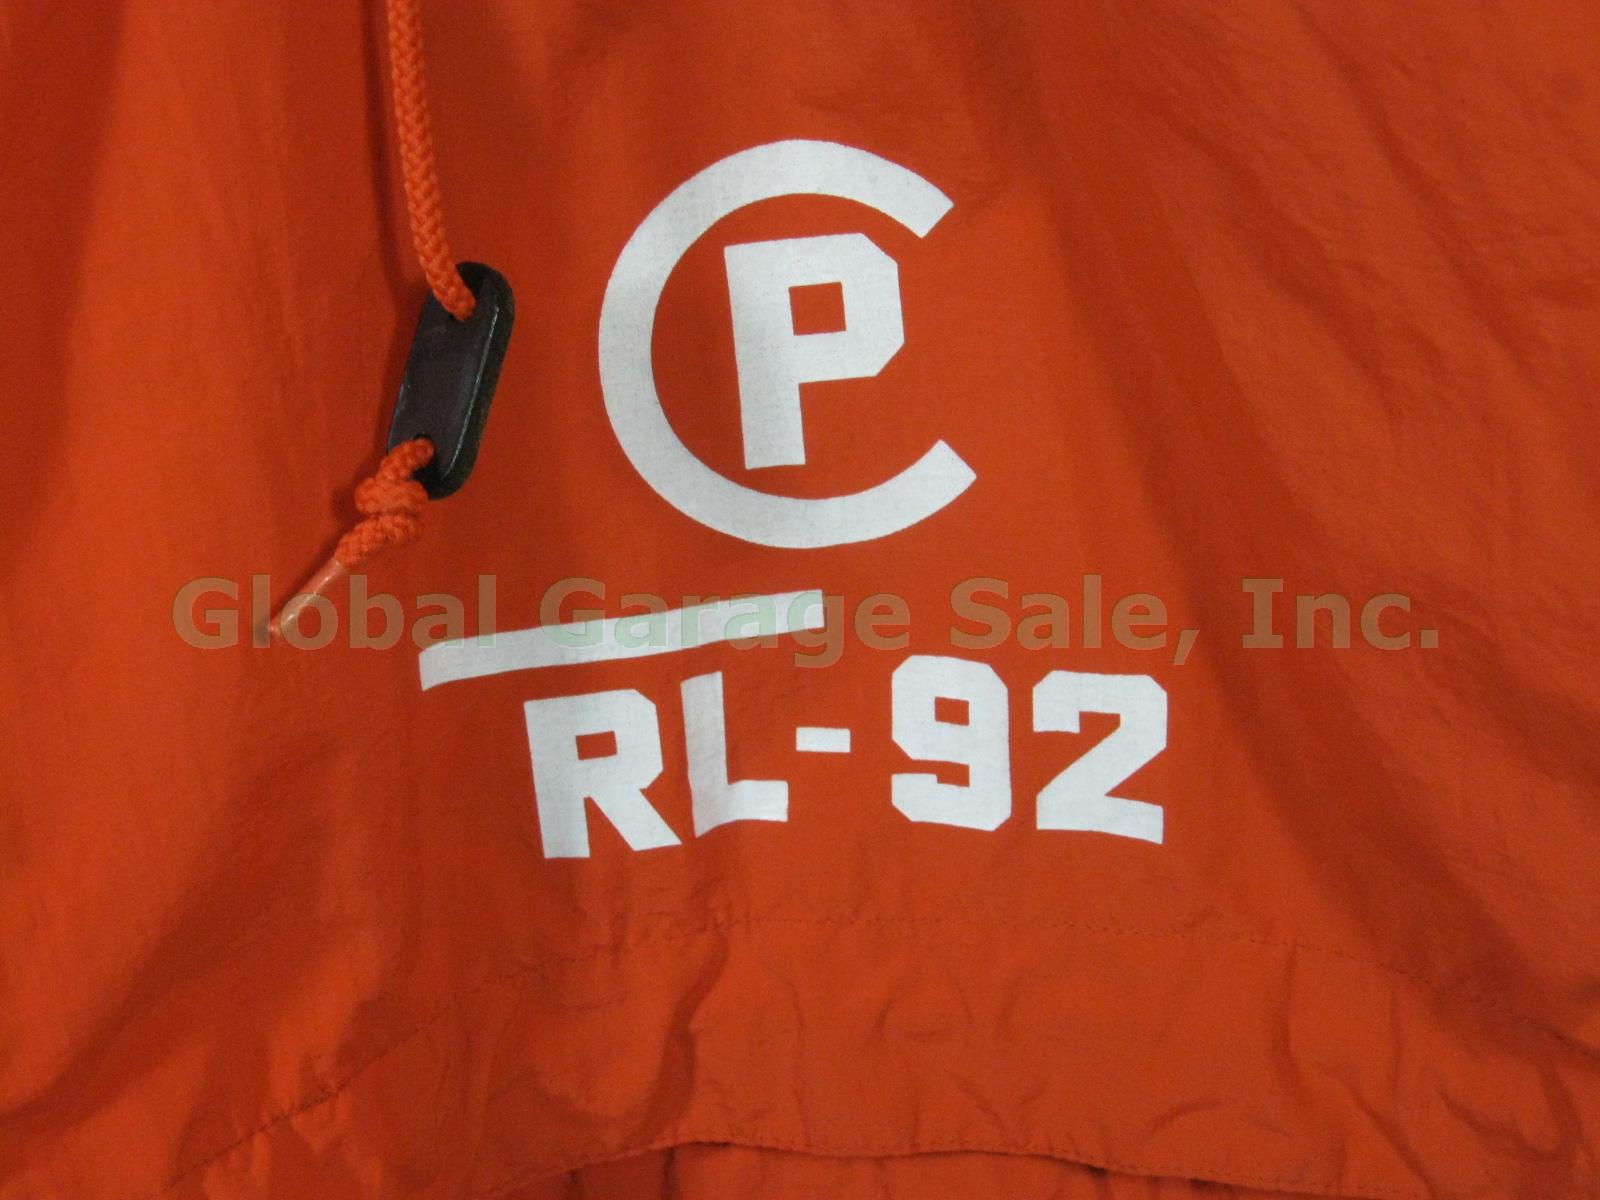 Vintage Polo By Ralph Lauren RL-92 Orange Field Jacket Size Large Never Worn! 3